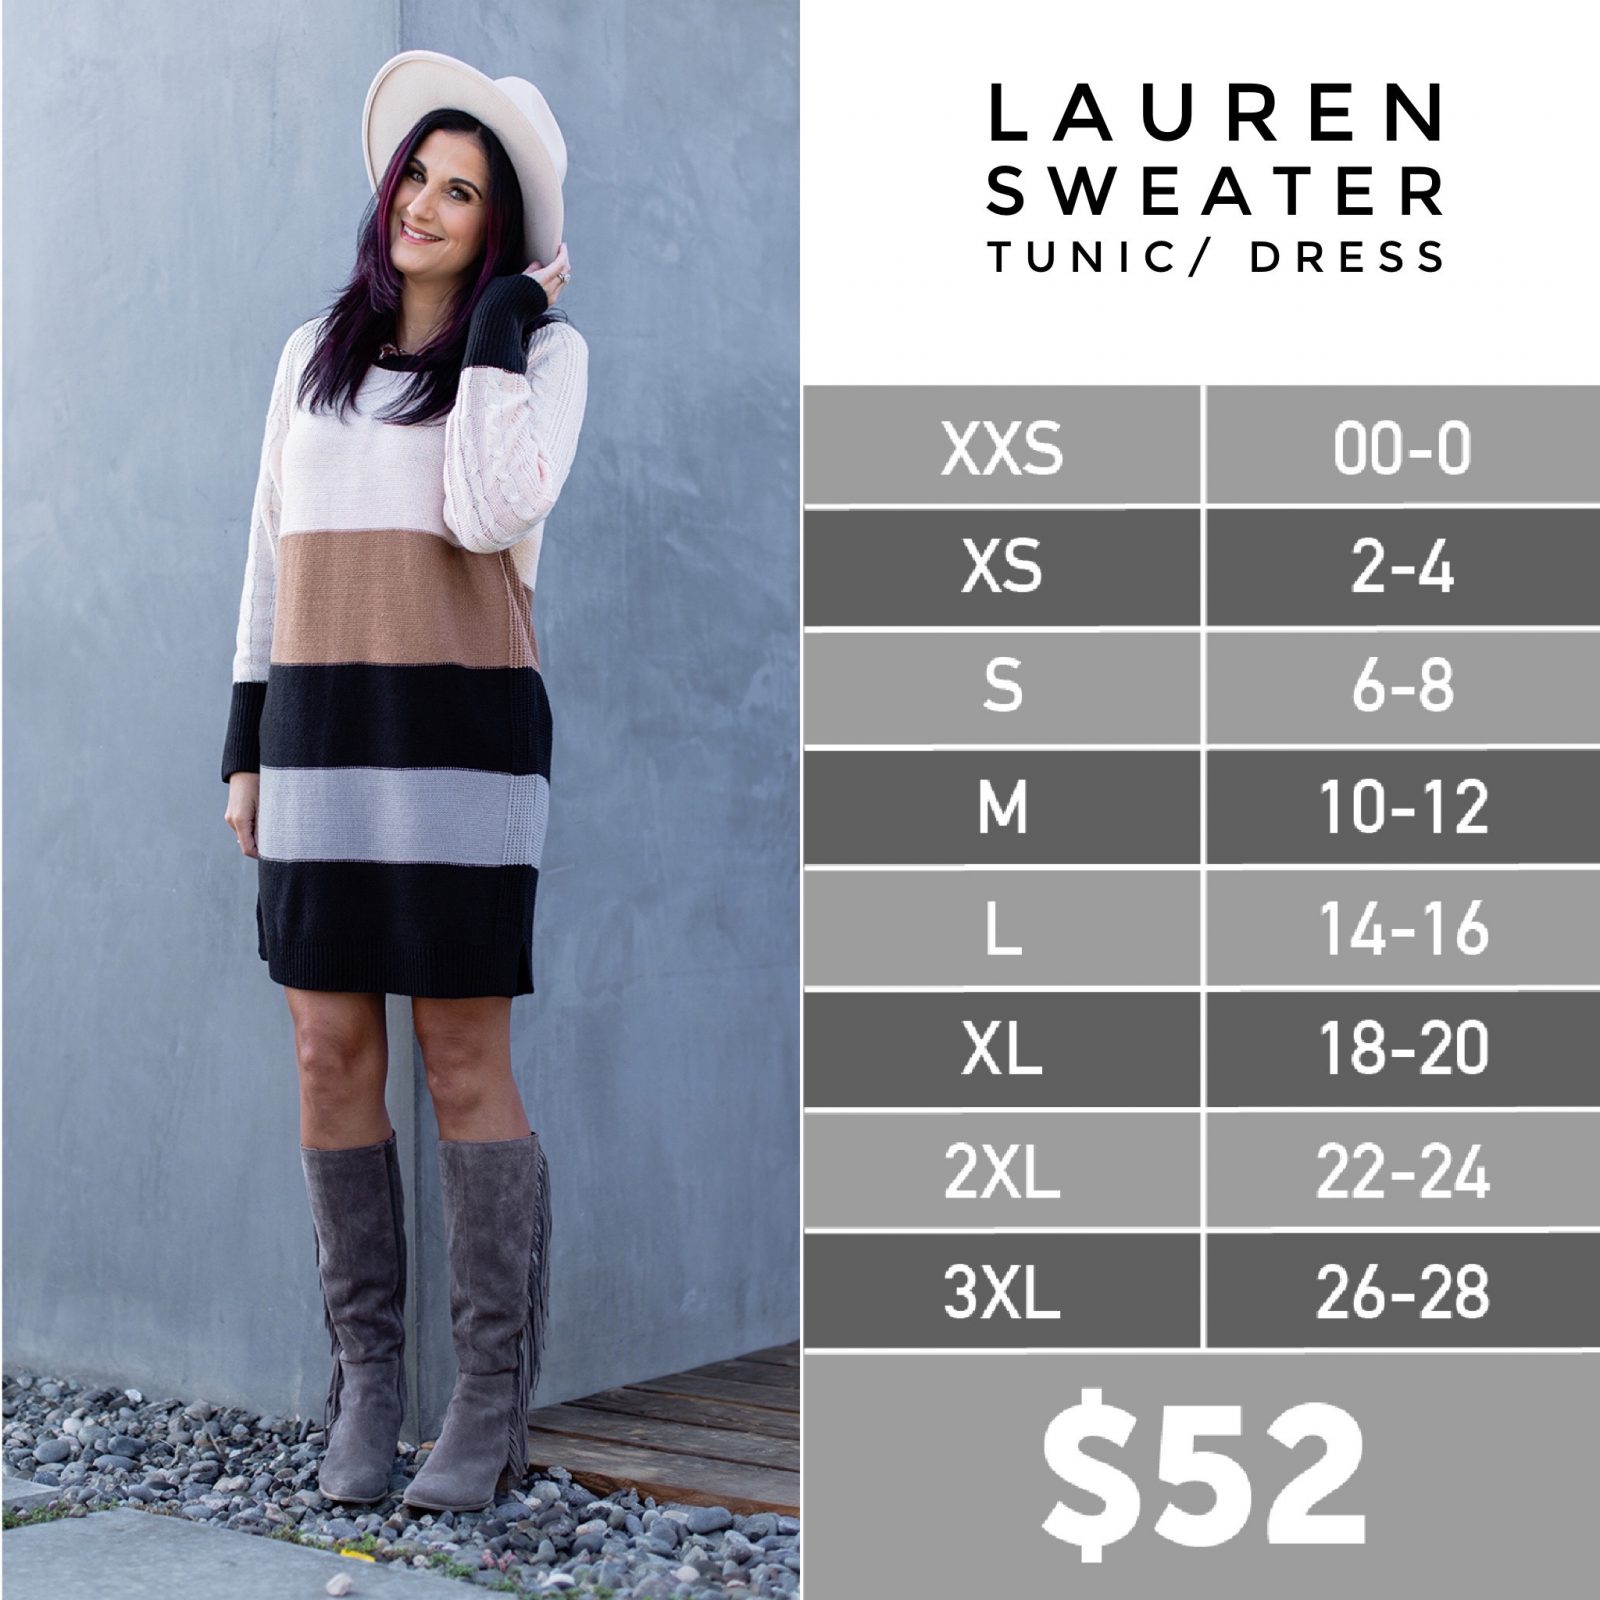 Lularoe Lauren Sweater Tunic Size Chart